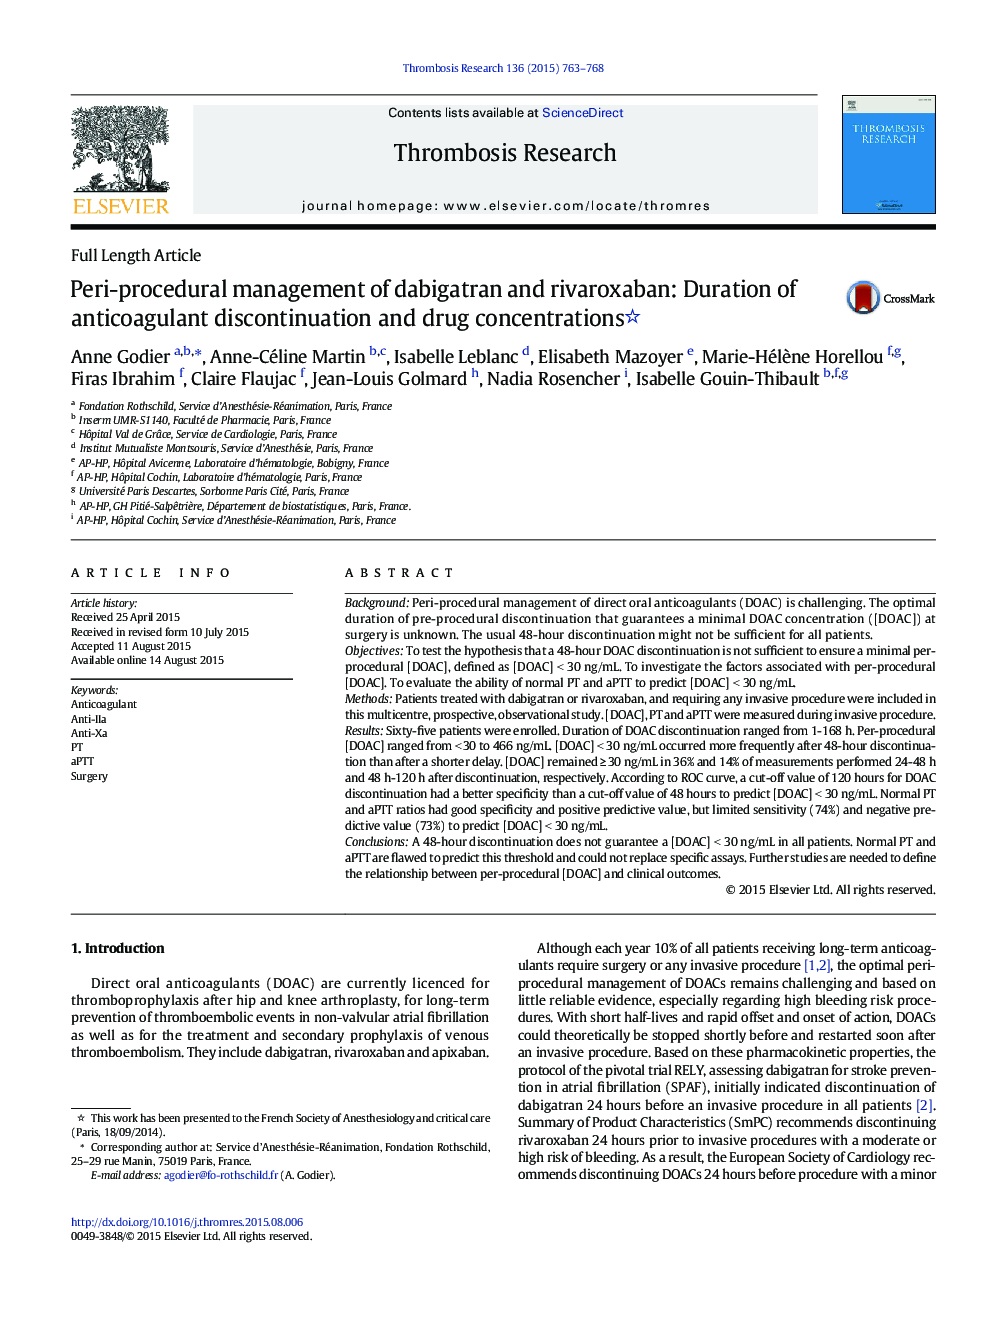 Peri-procedural management of dabigatran and rivaroxaban: Duration of anticoagulant discontinuation and drug concentrations